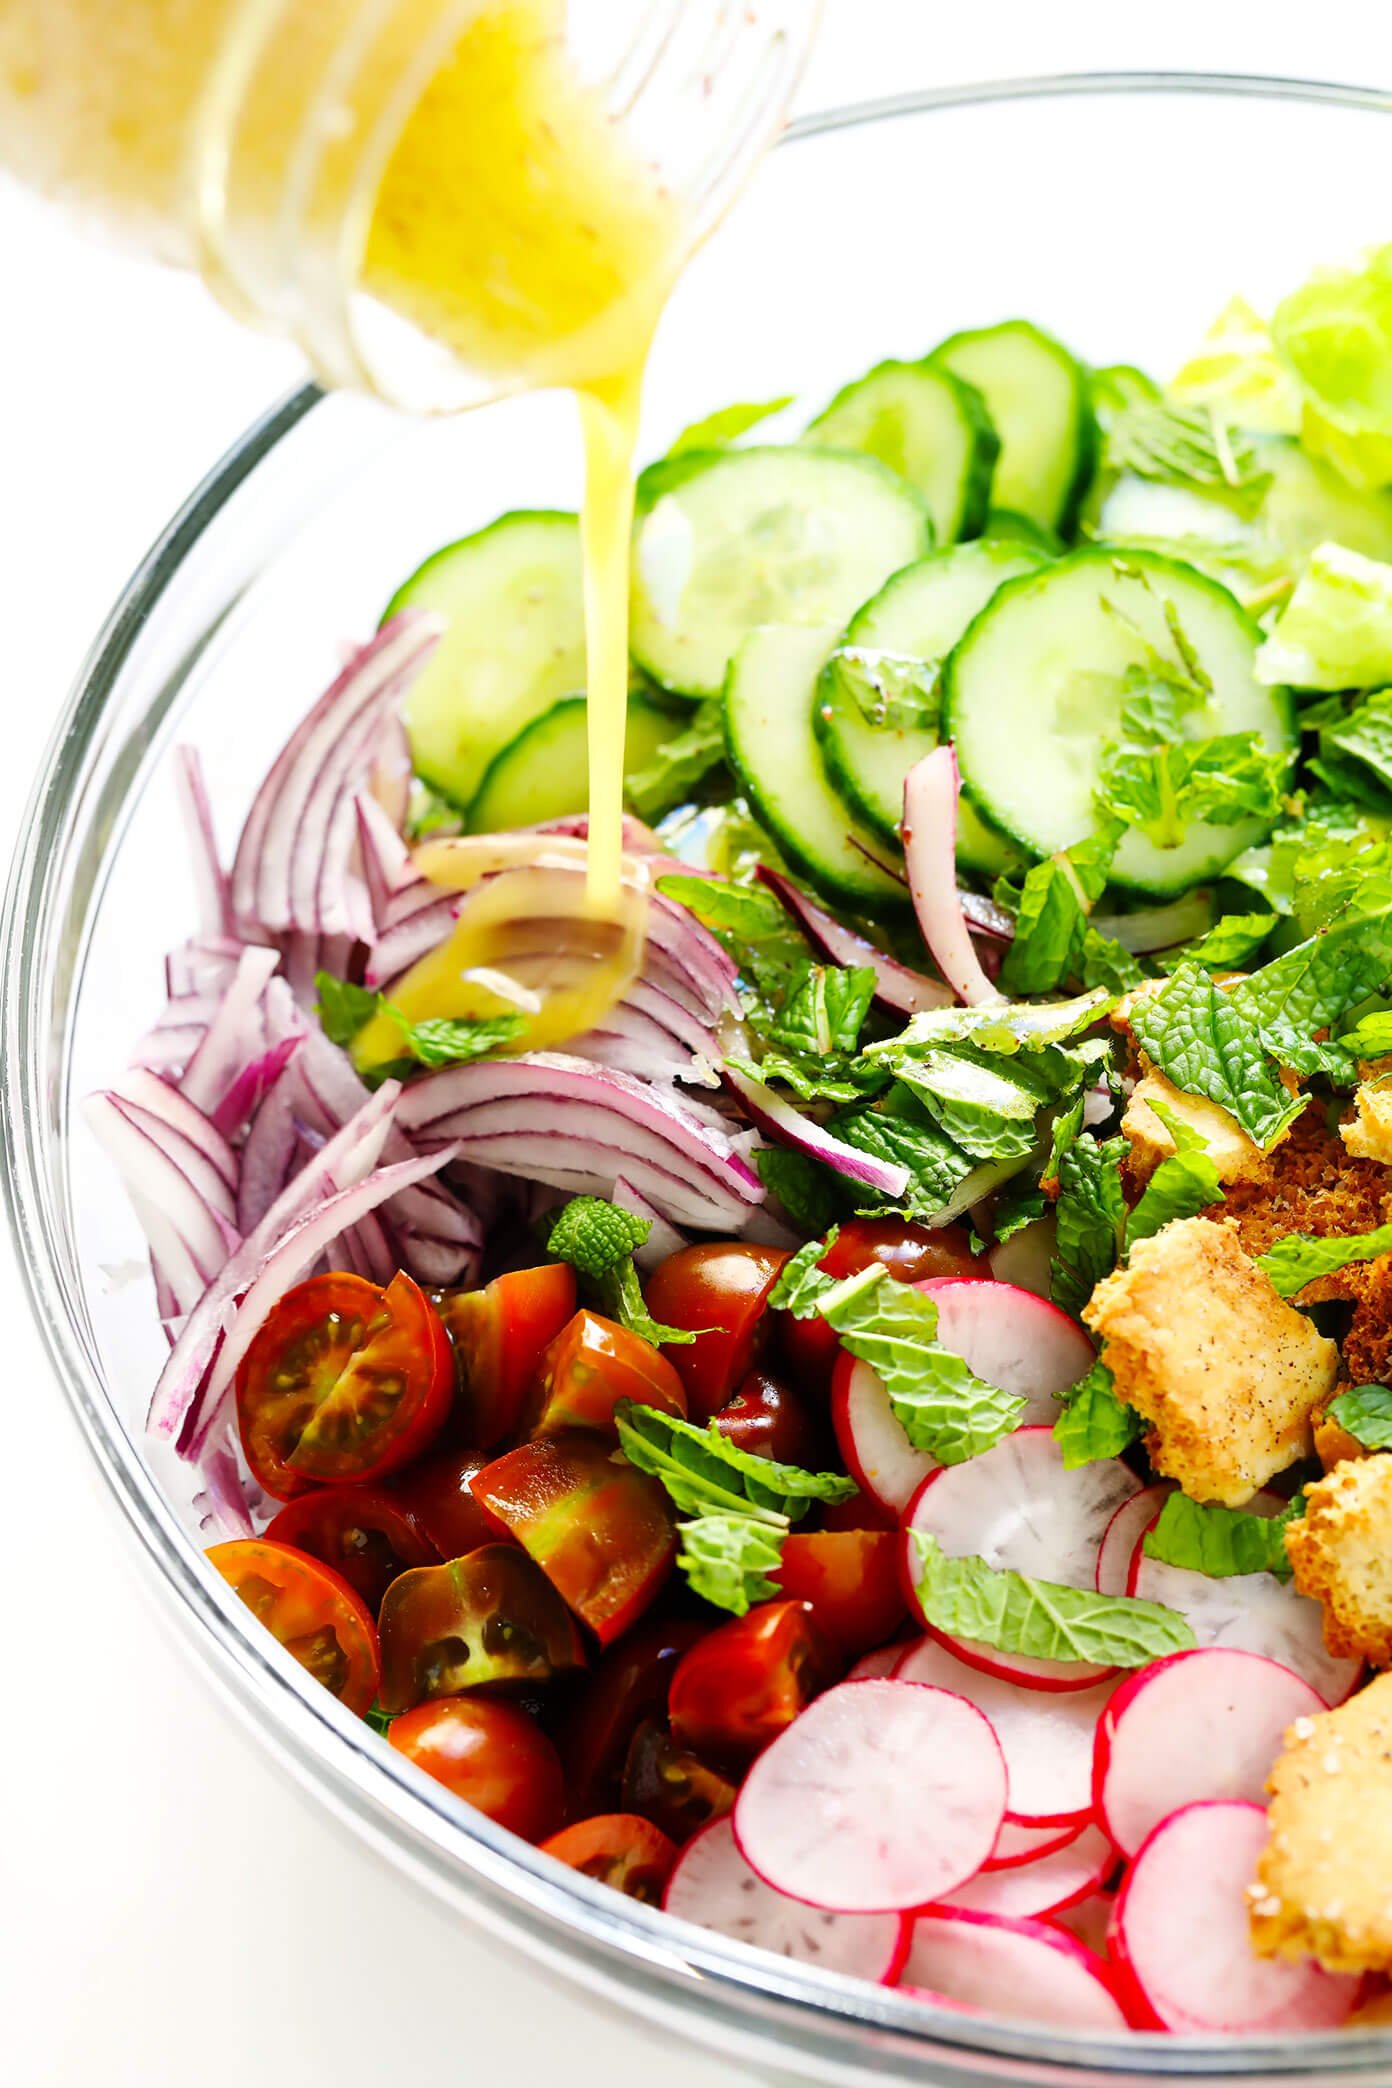 How To Make Fattoush Salad